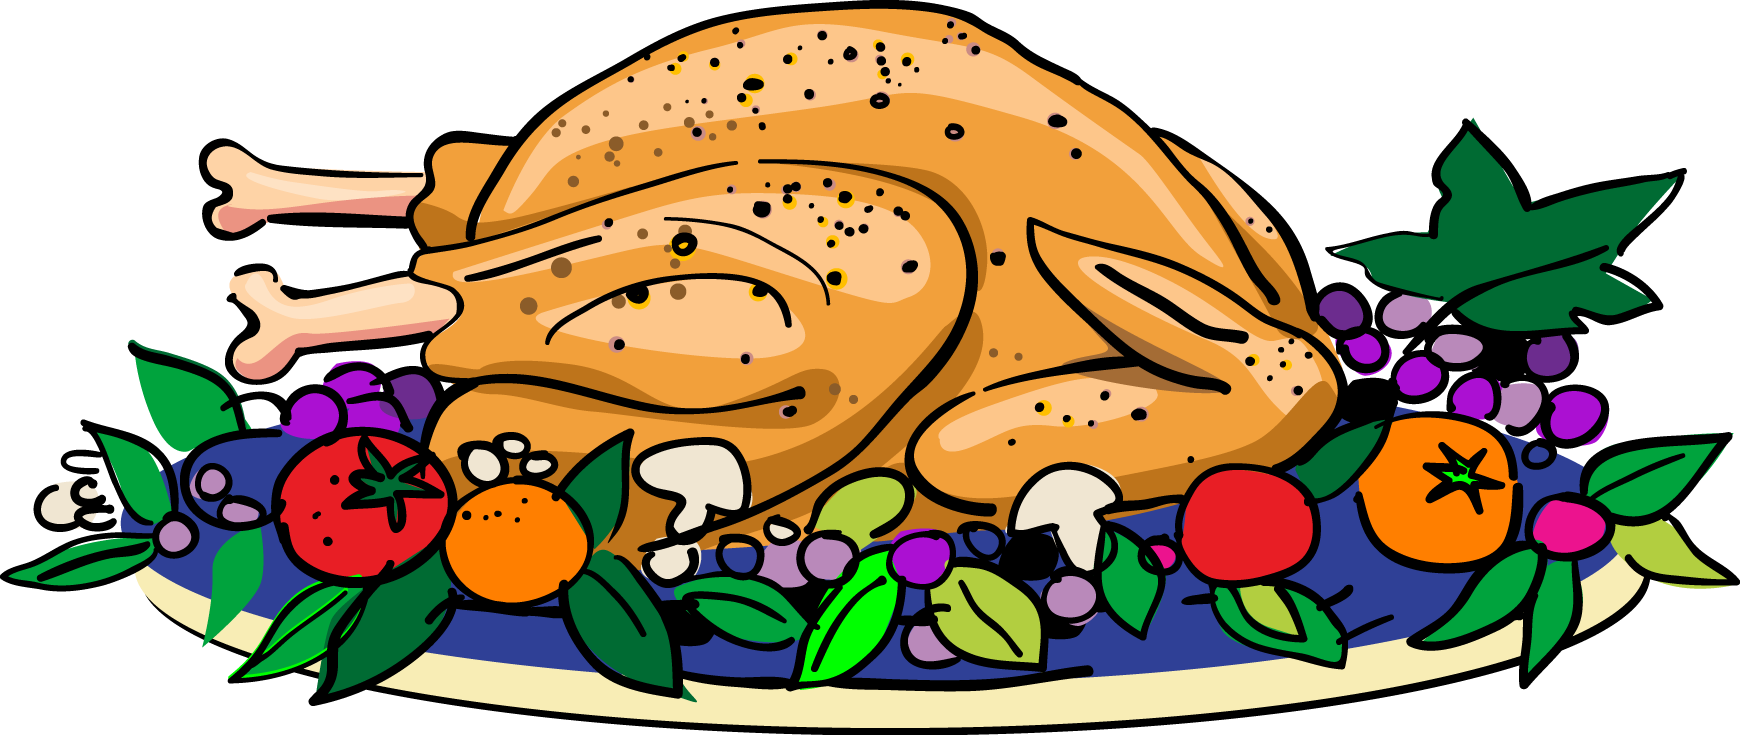 cartoon cooked thanksgiving turkey